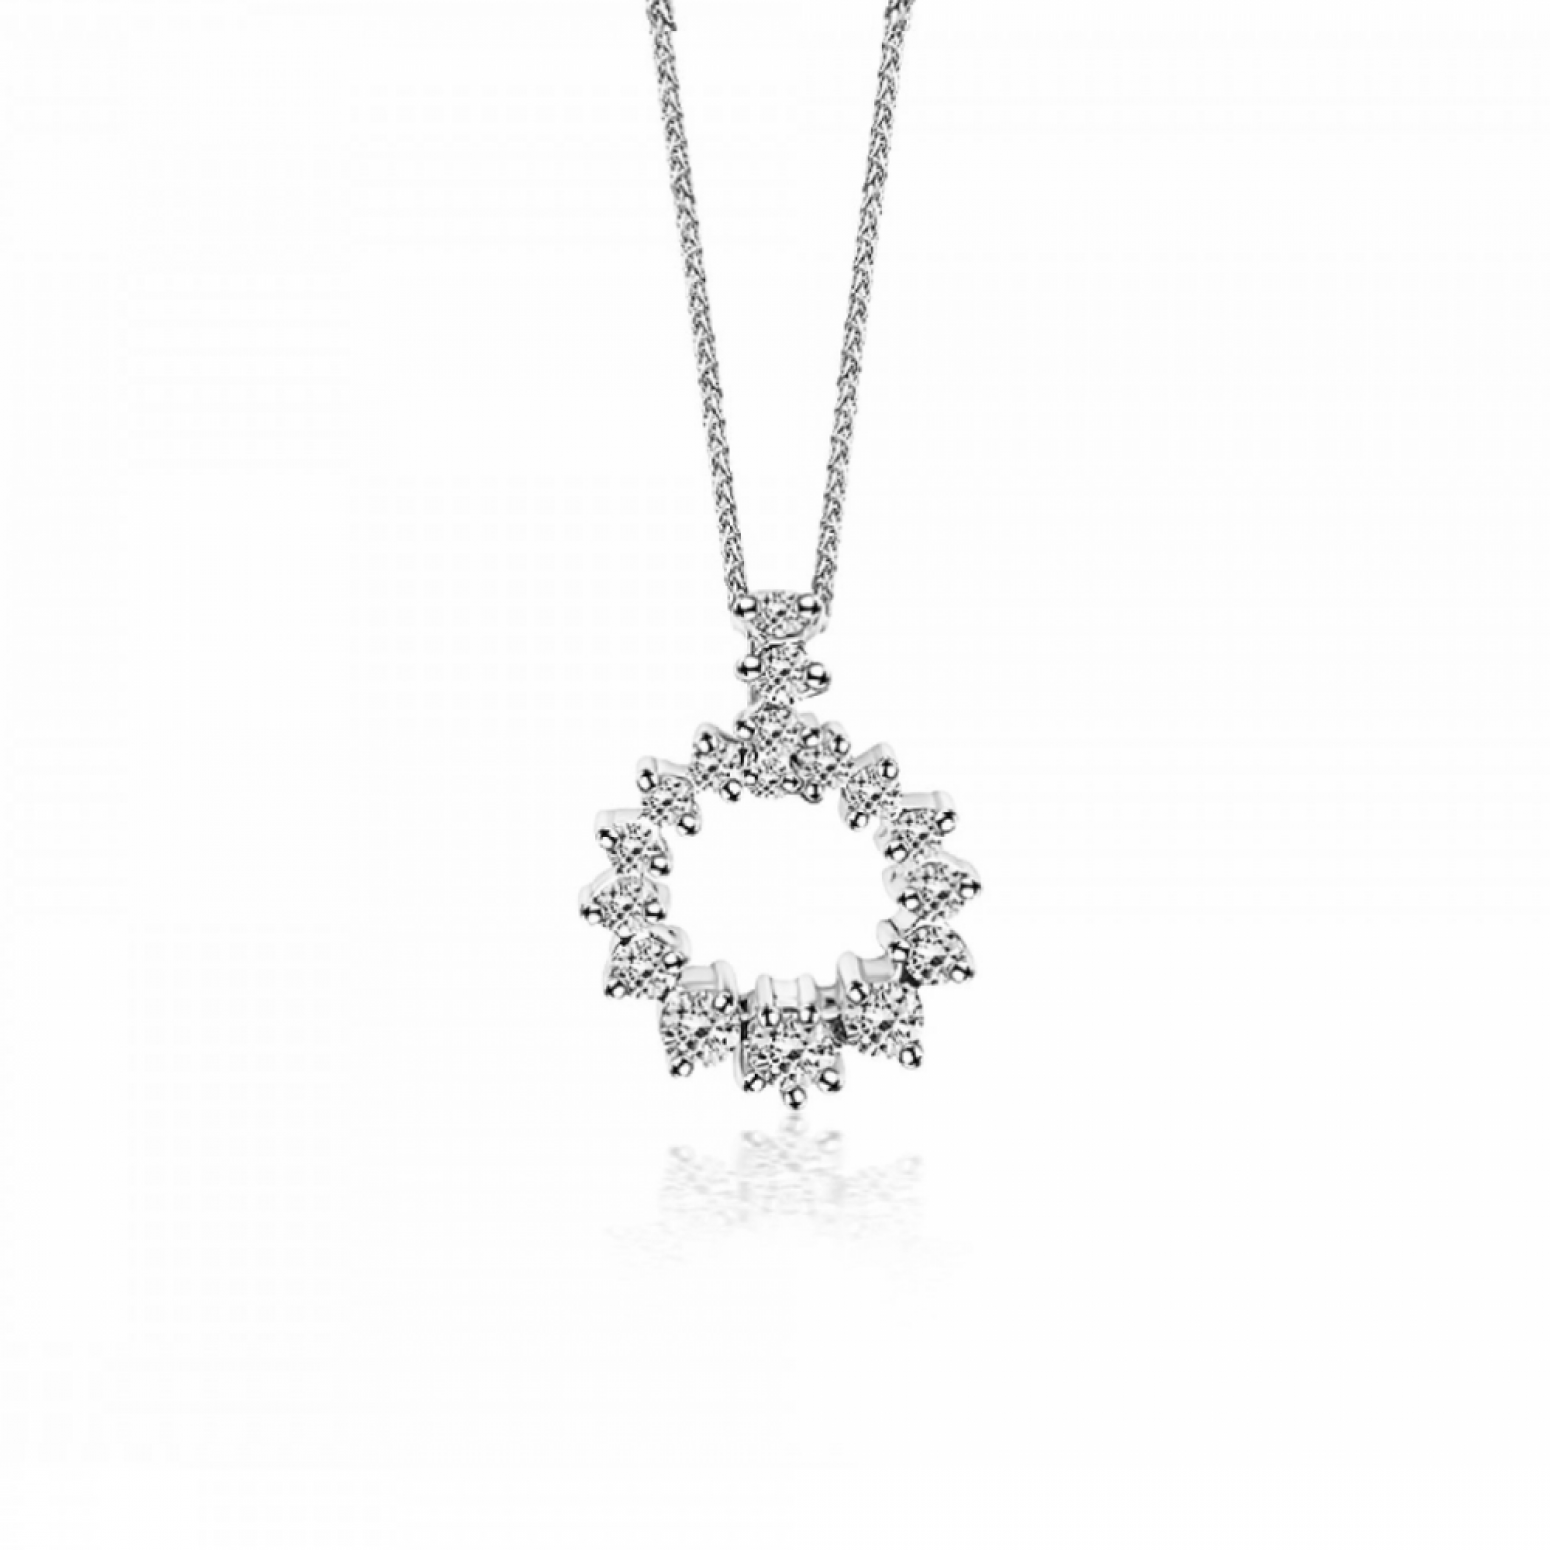 Multistone necklace 18K white gold with diamonds 0.55ct, VS1, G me2178 NECKLACES Κοσμηματα - chrilia.gr